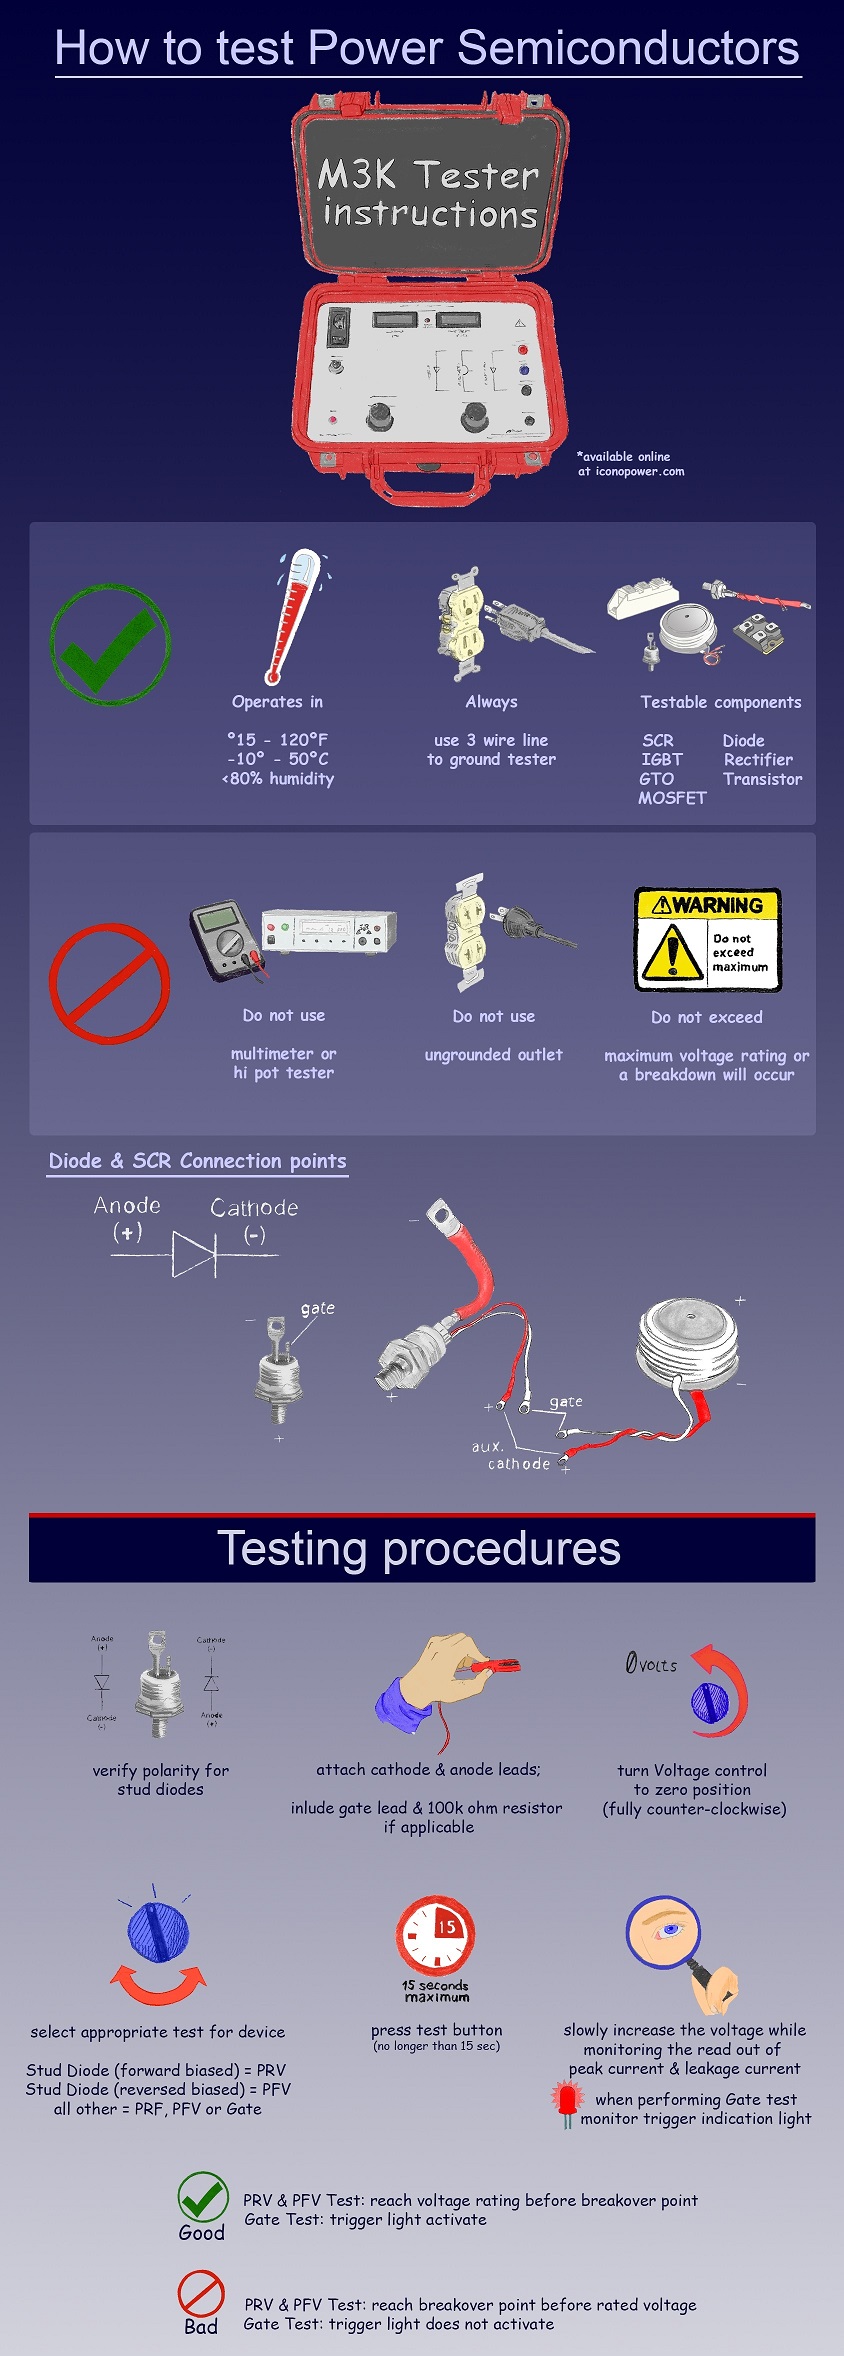 M3K testing procedures infographic